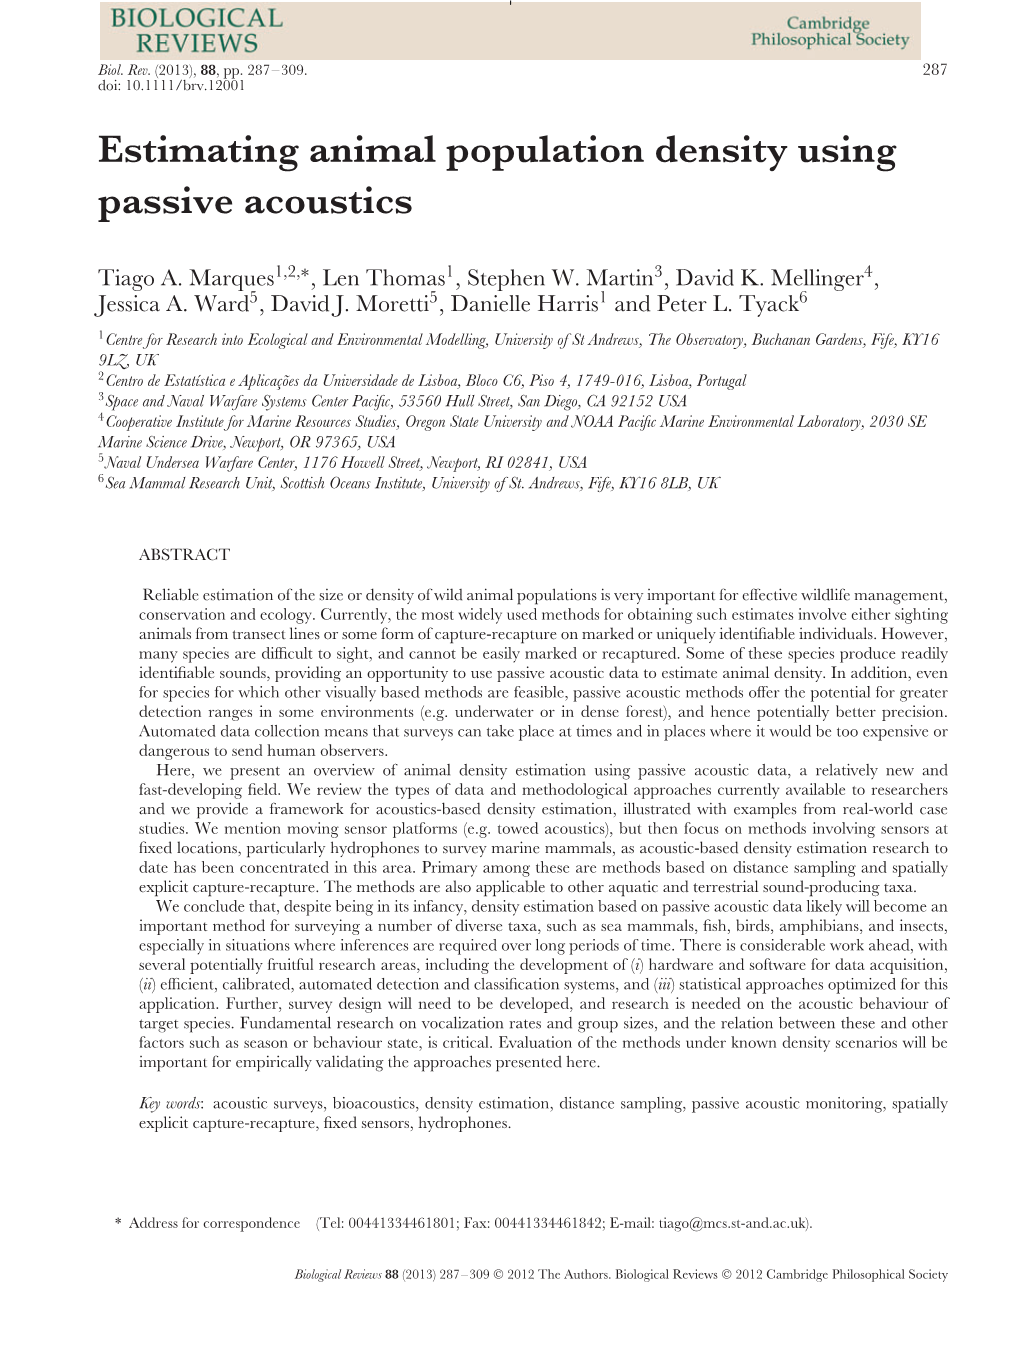 Estimating Animal Population Density Using Passive Acoustics